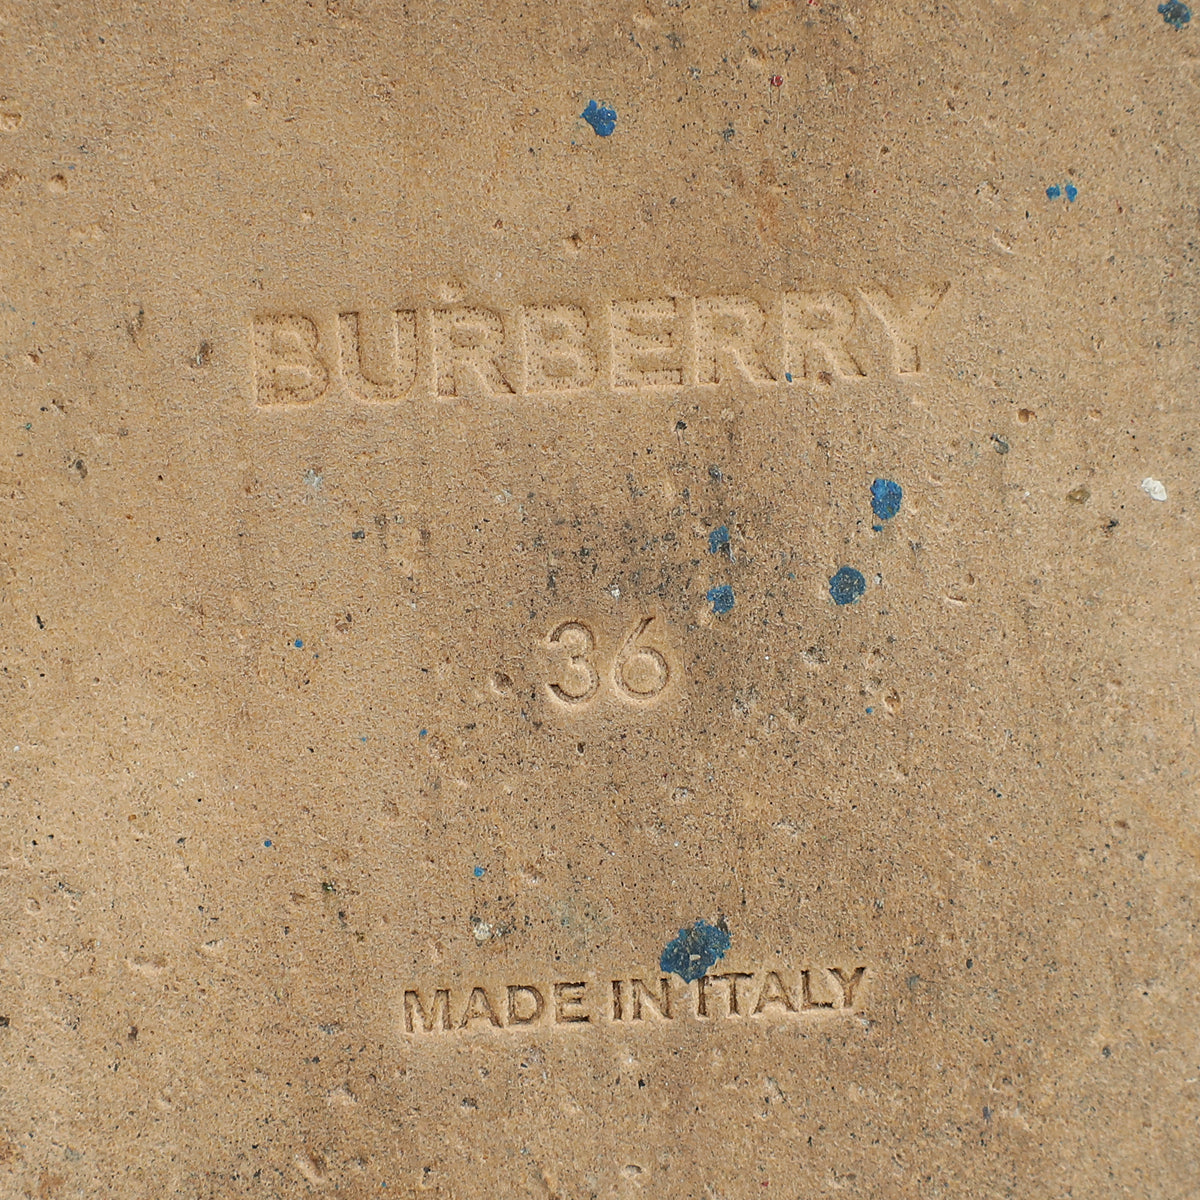 Burberry Archive Beige Quilted Alixa Flat Slide Sandals 36